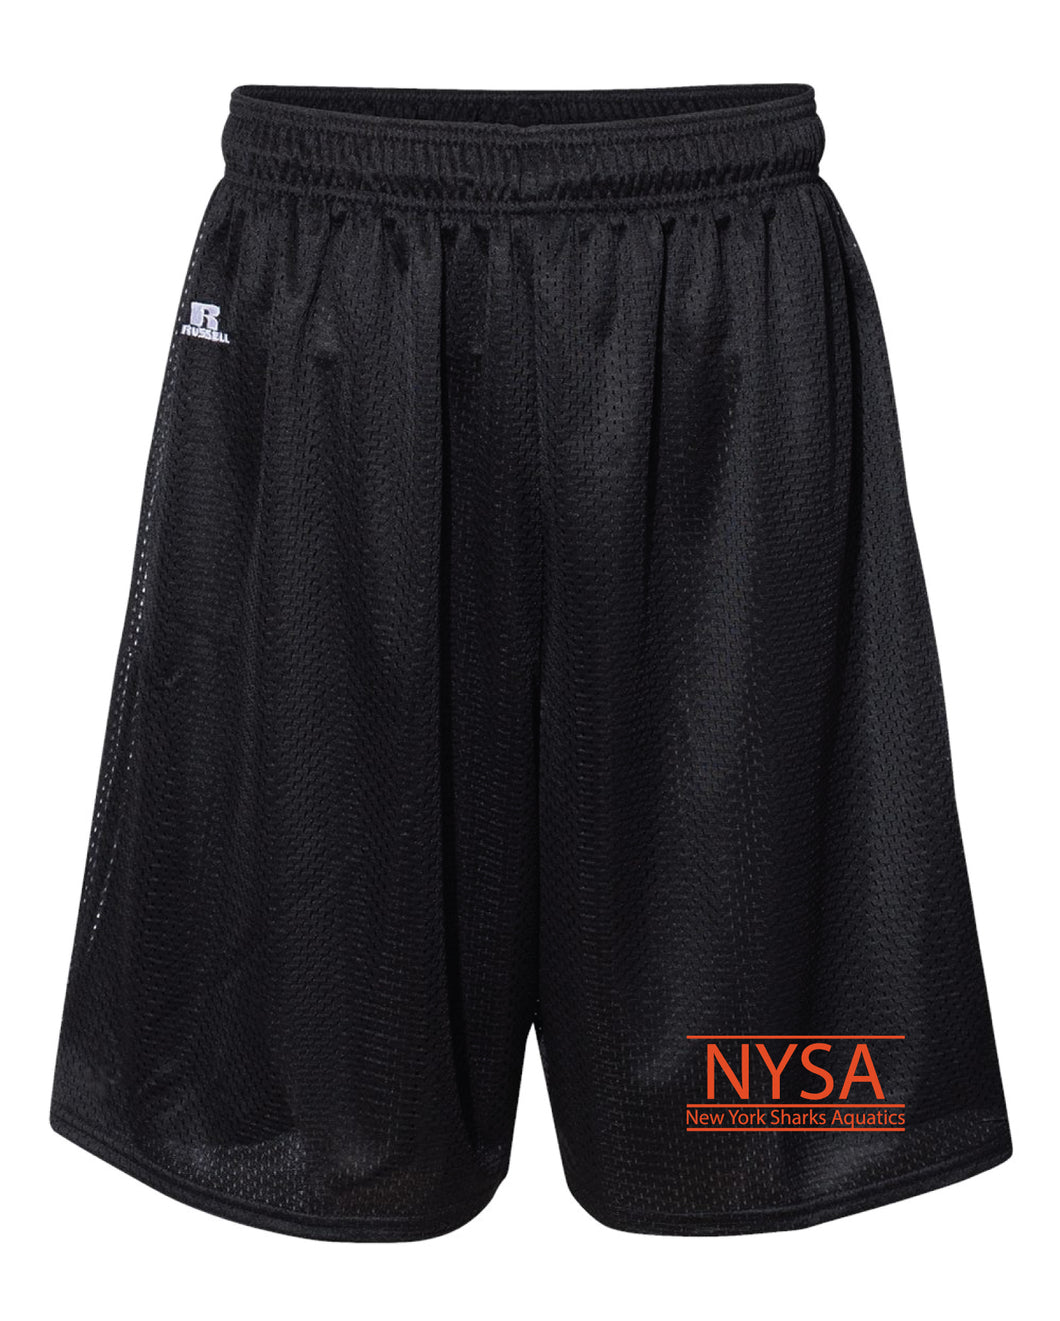 NYSA Russell Athletic  Tech Shorts - Black - 5KounT2018